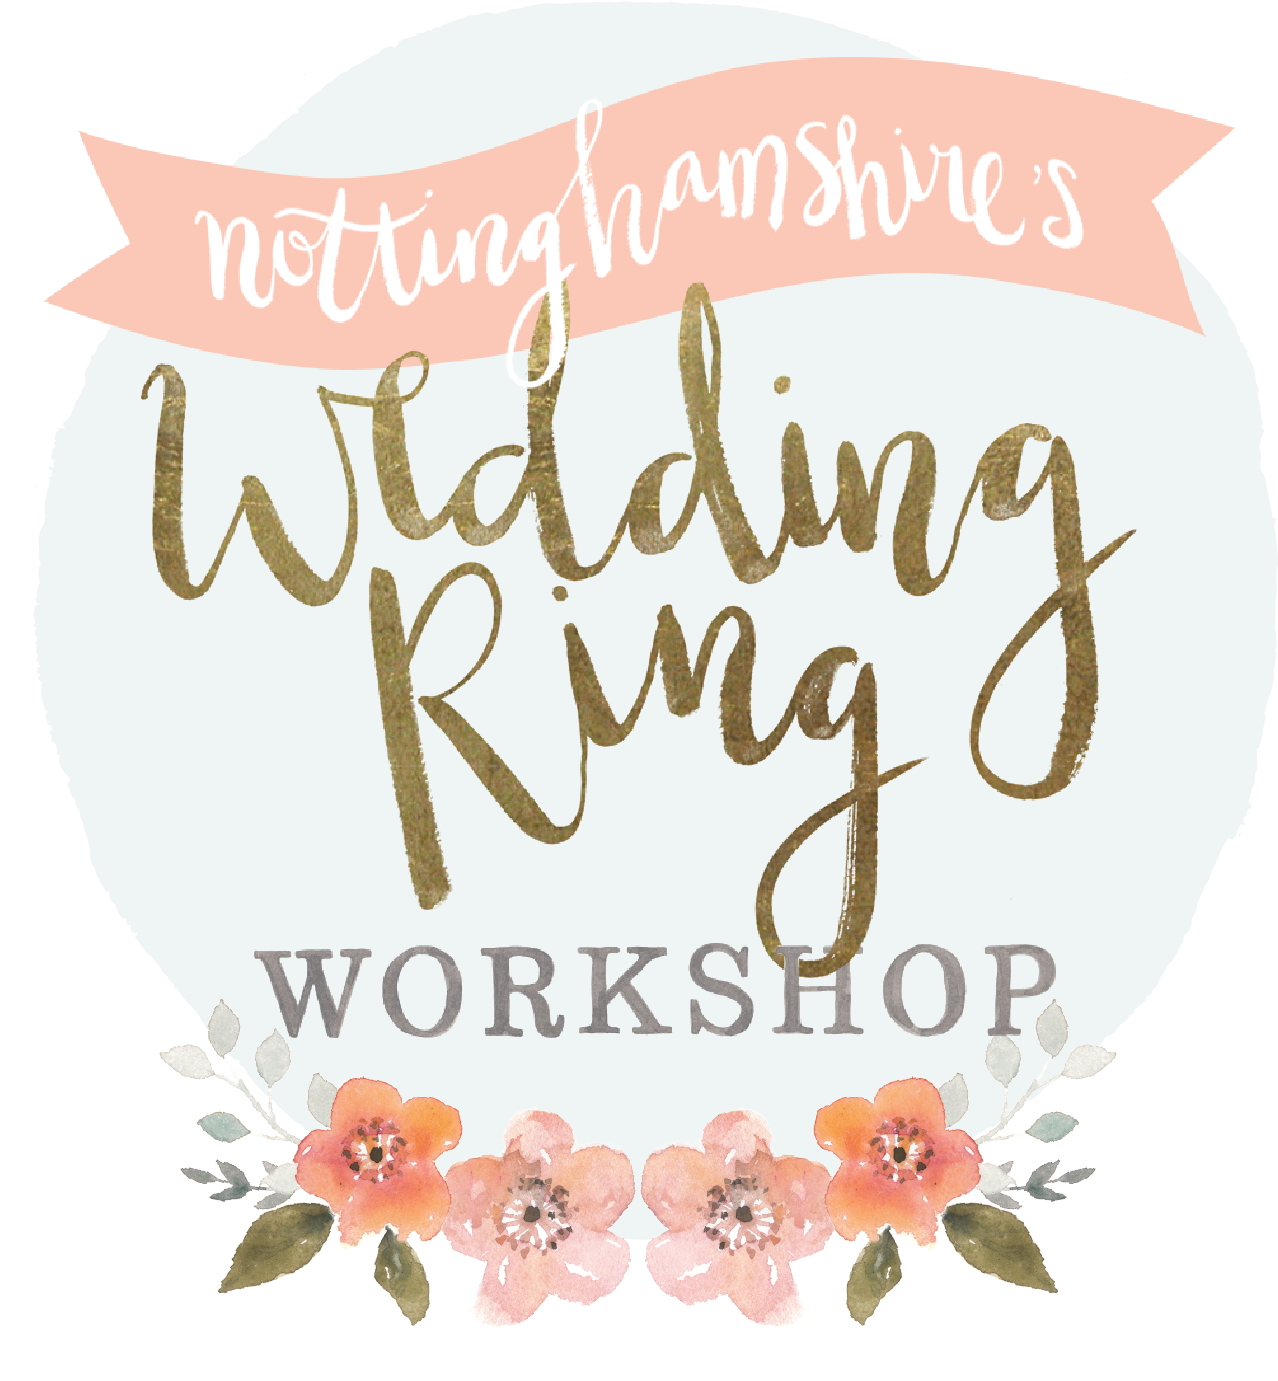 The Nottinghamshire's Wedding Ring Workshop